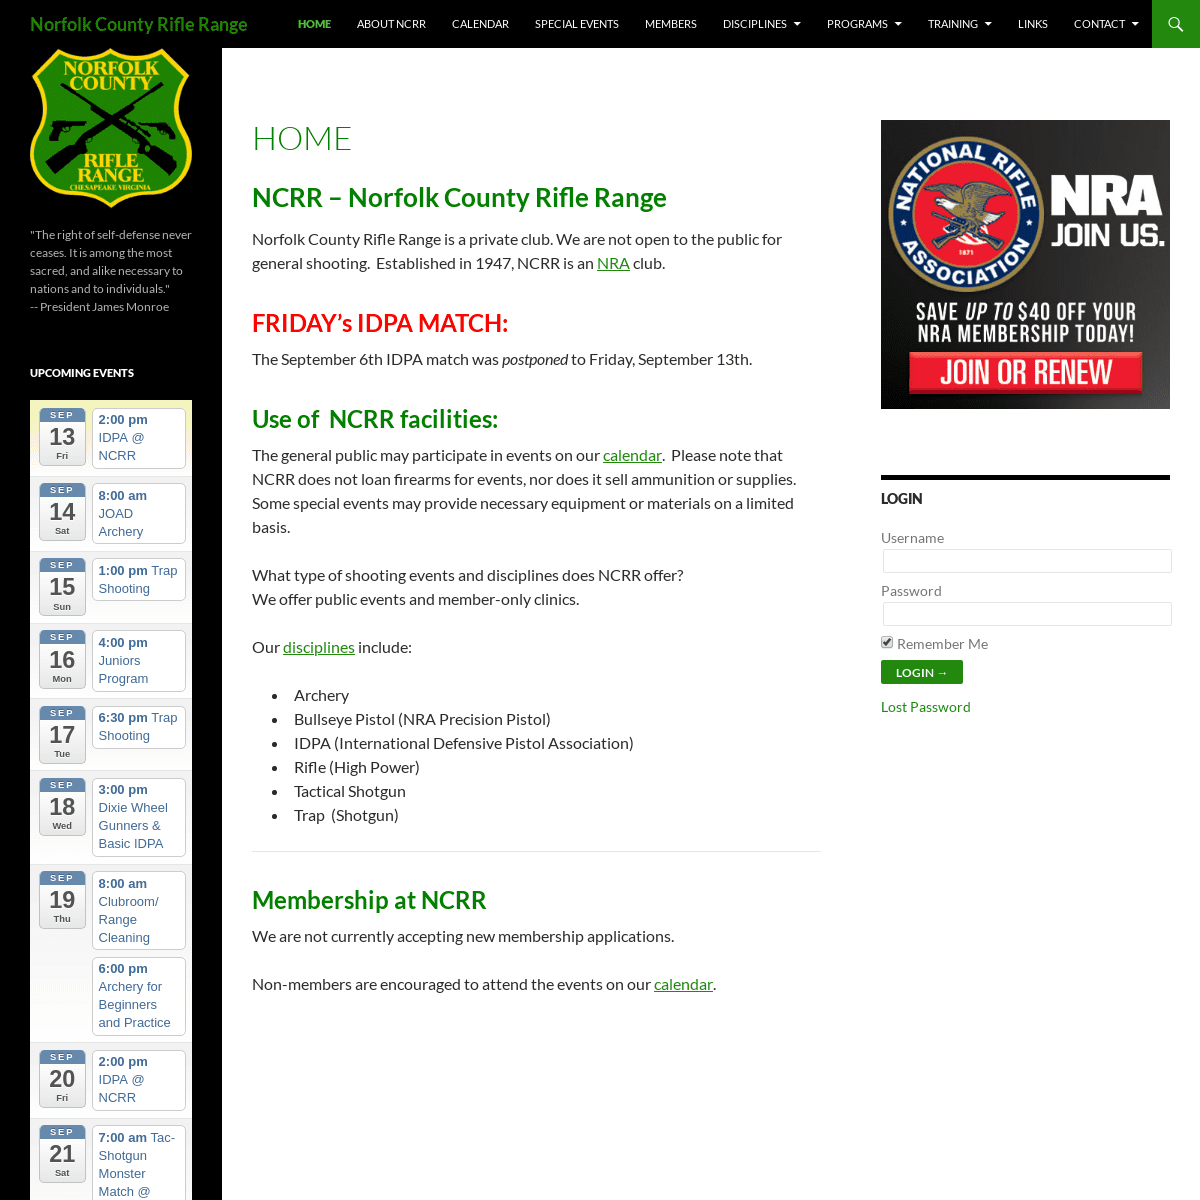 NCRR - Norfolk County Rifle Range - A private club in Chesapeake, VA